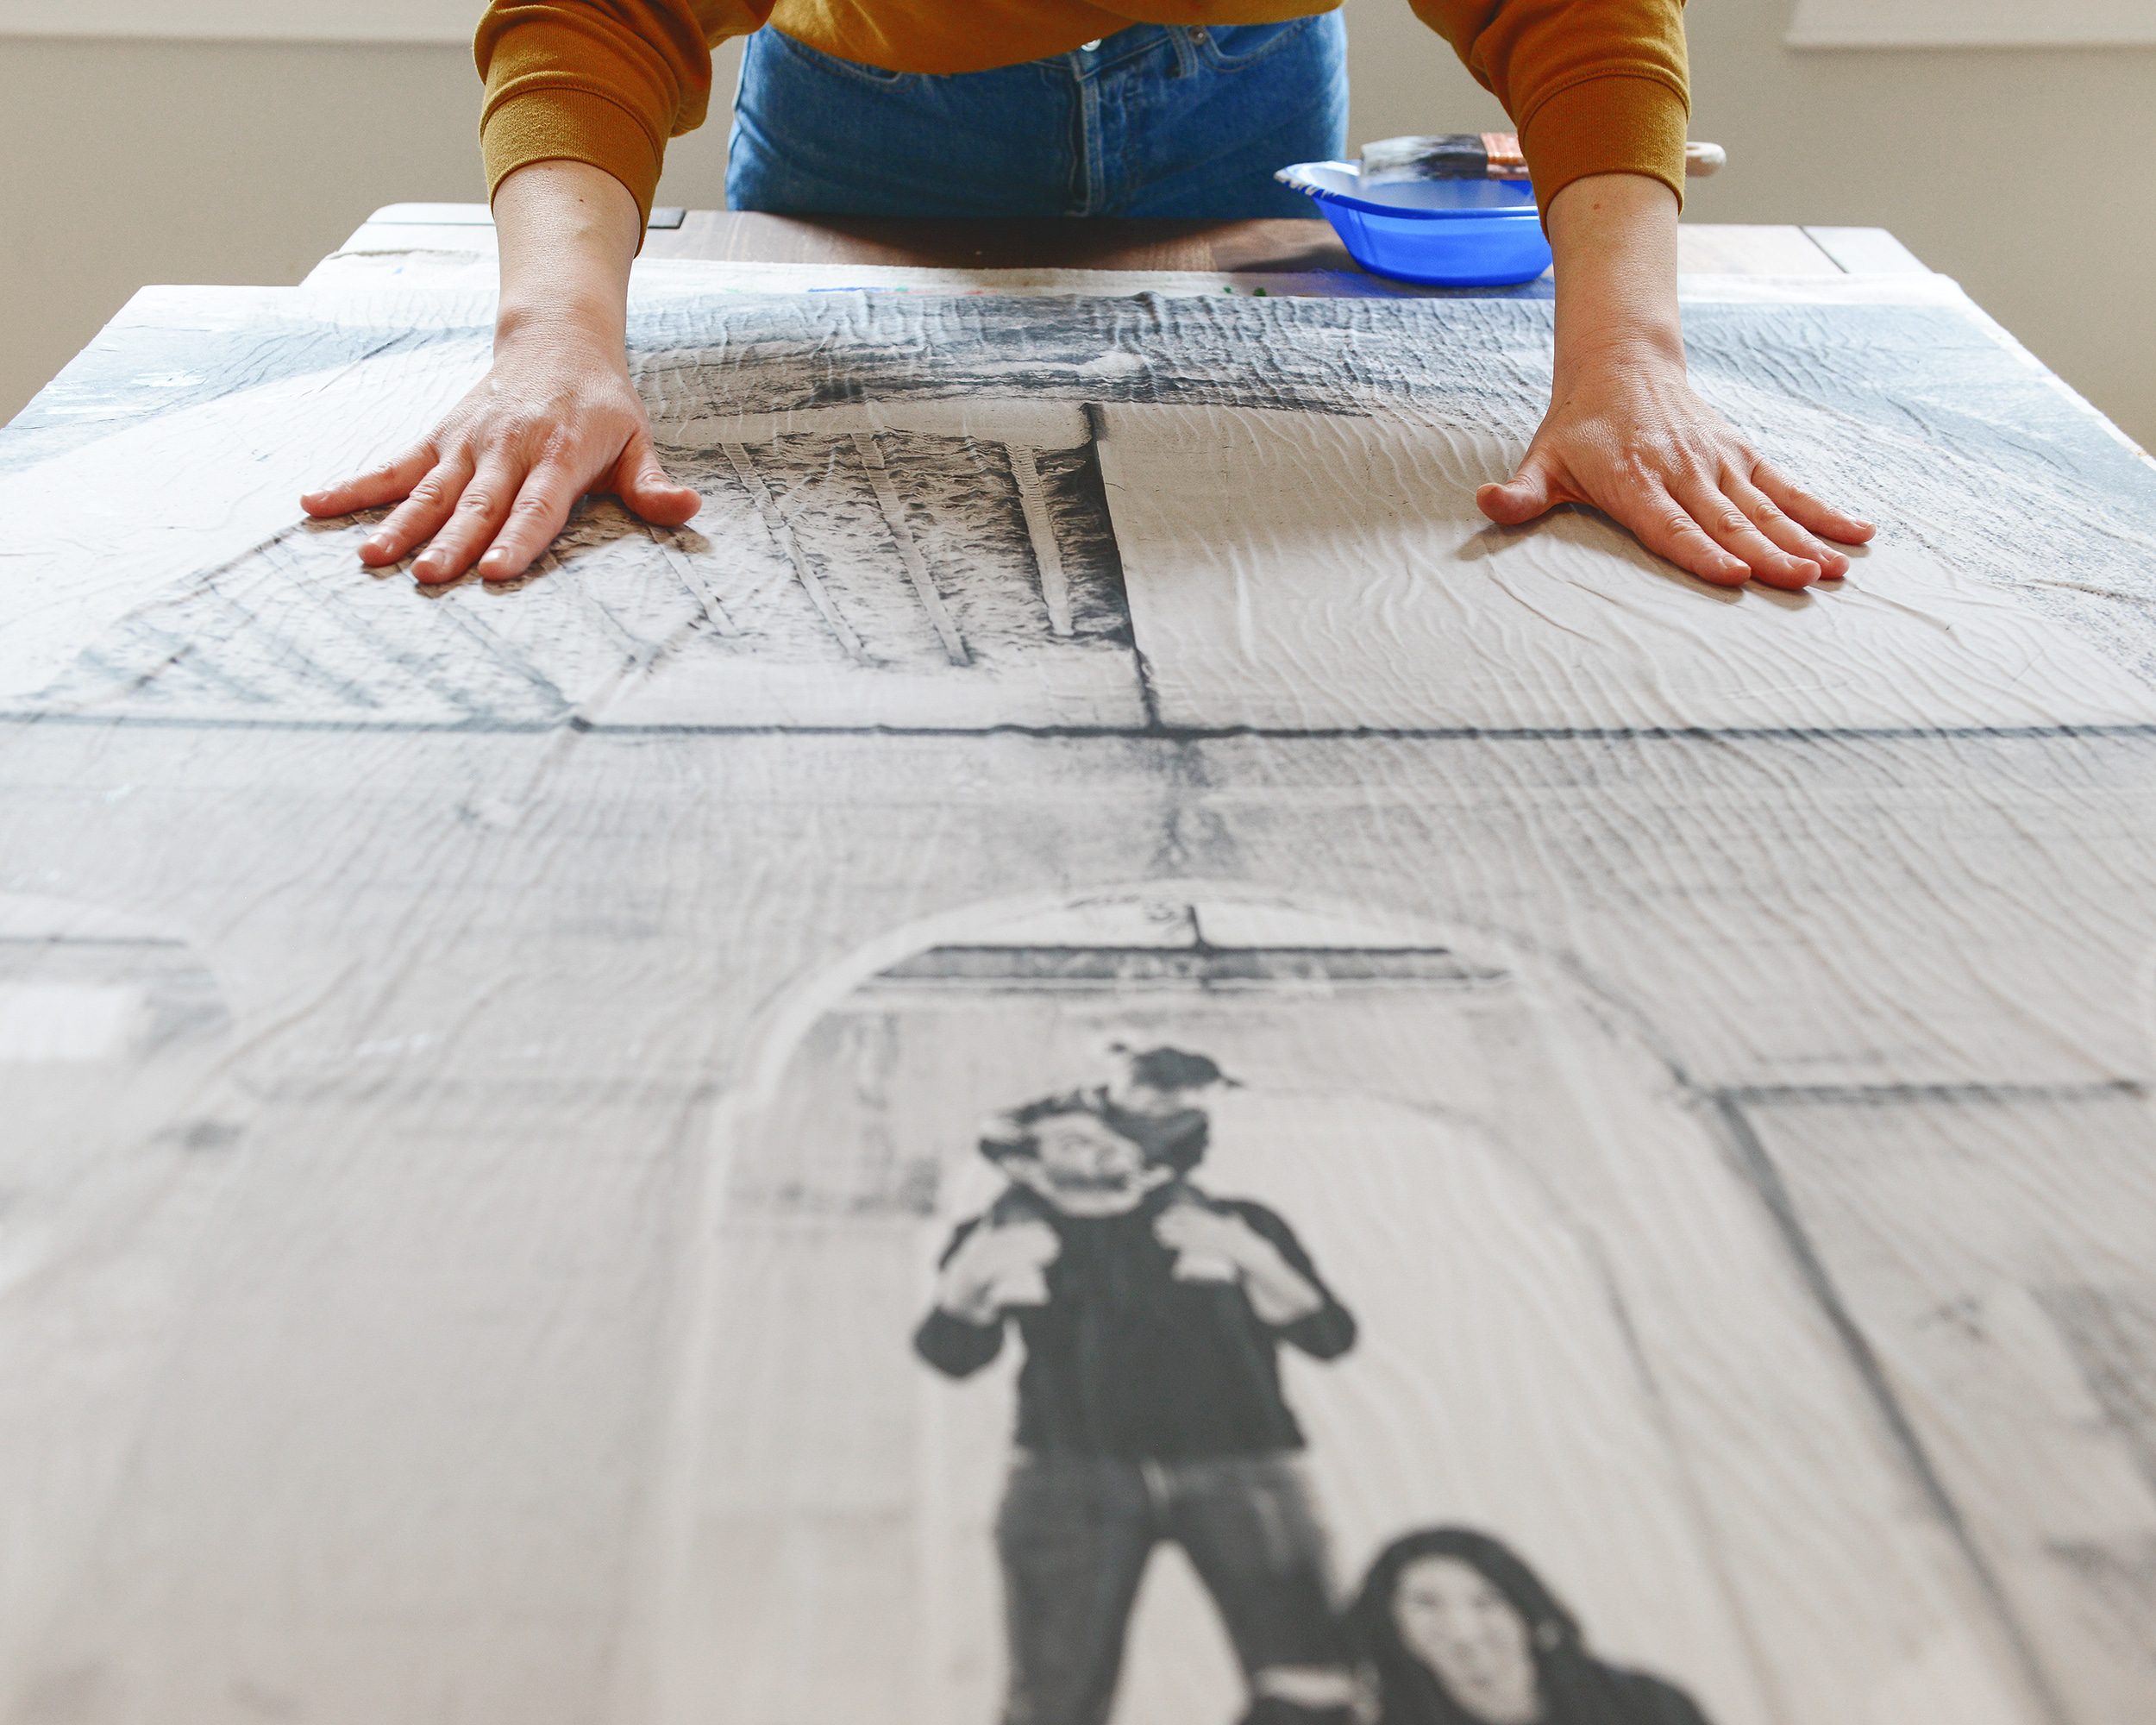 Smoothing our engineer print that we Mod Podged onto canvas | DIY engineer print art | via Yellow Brick Home